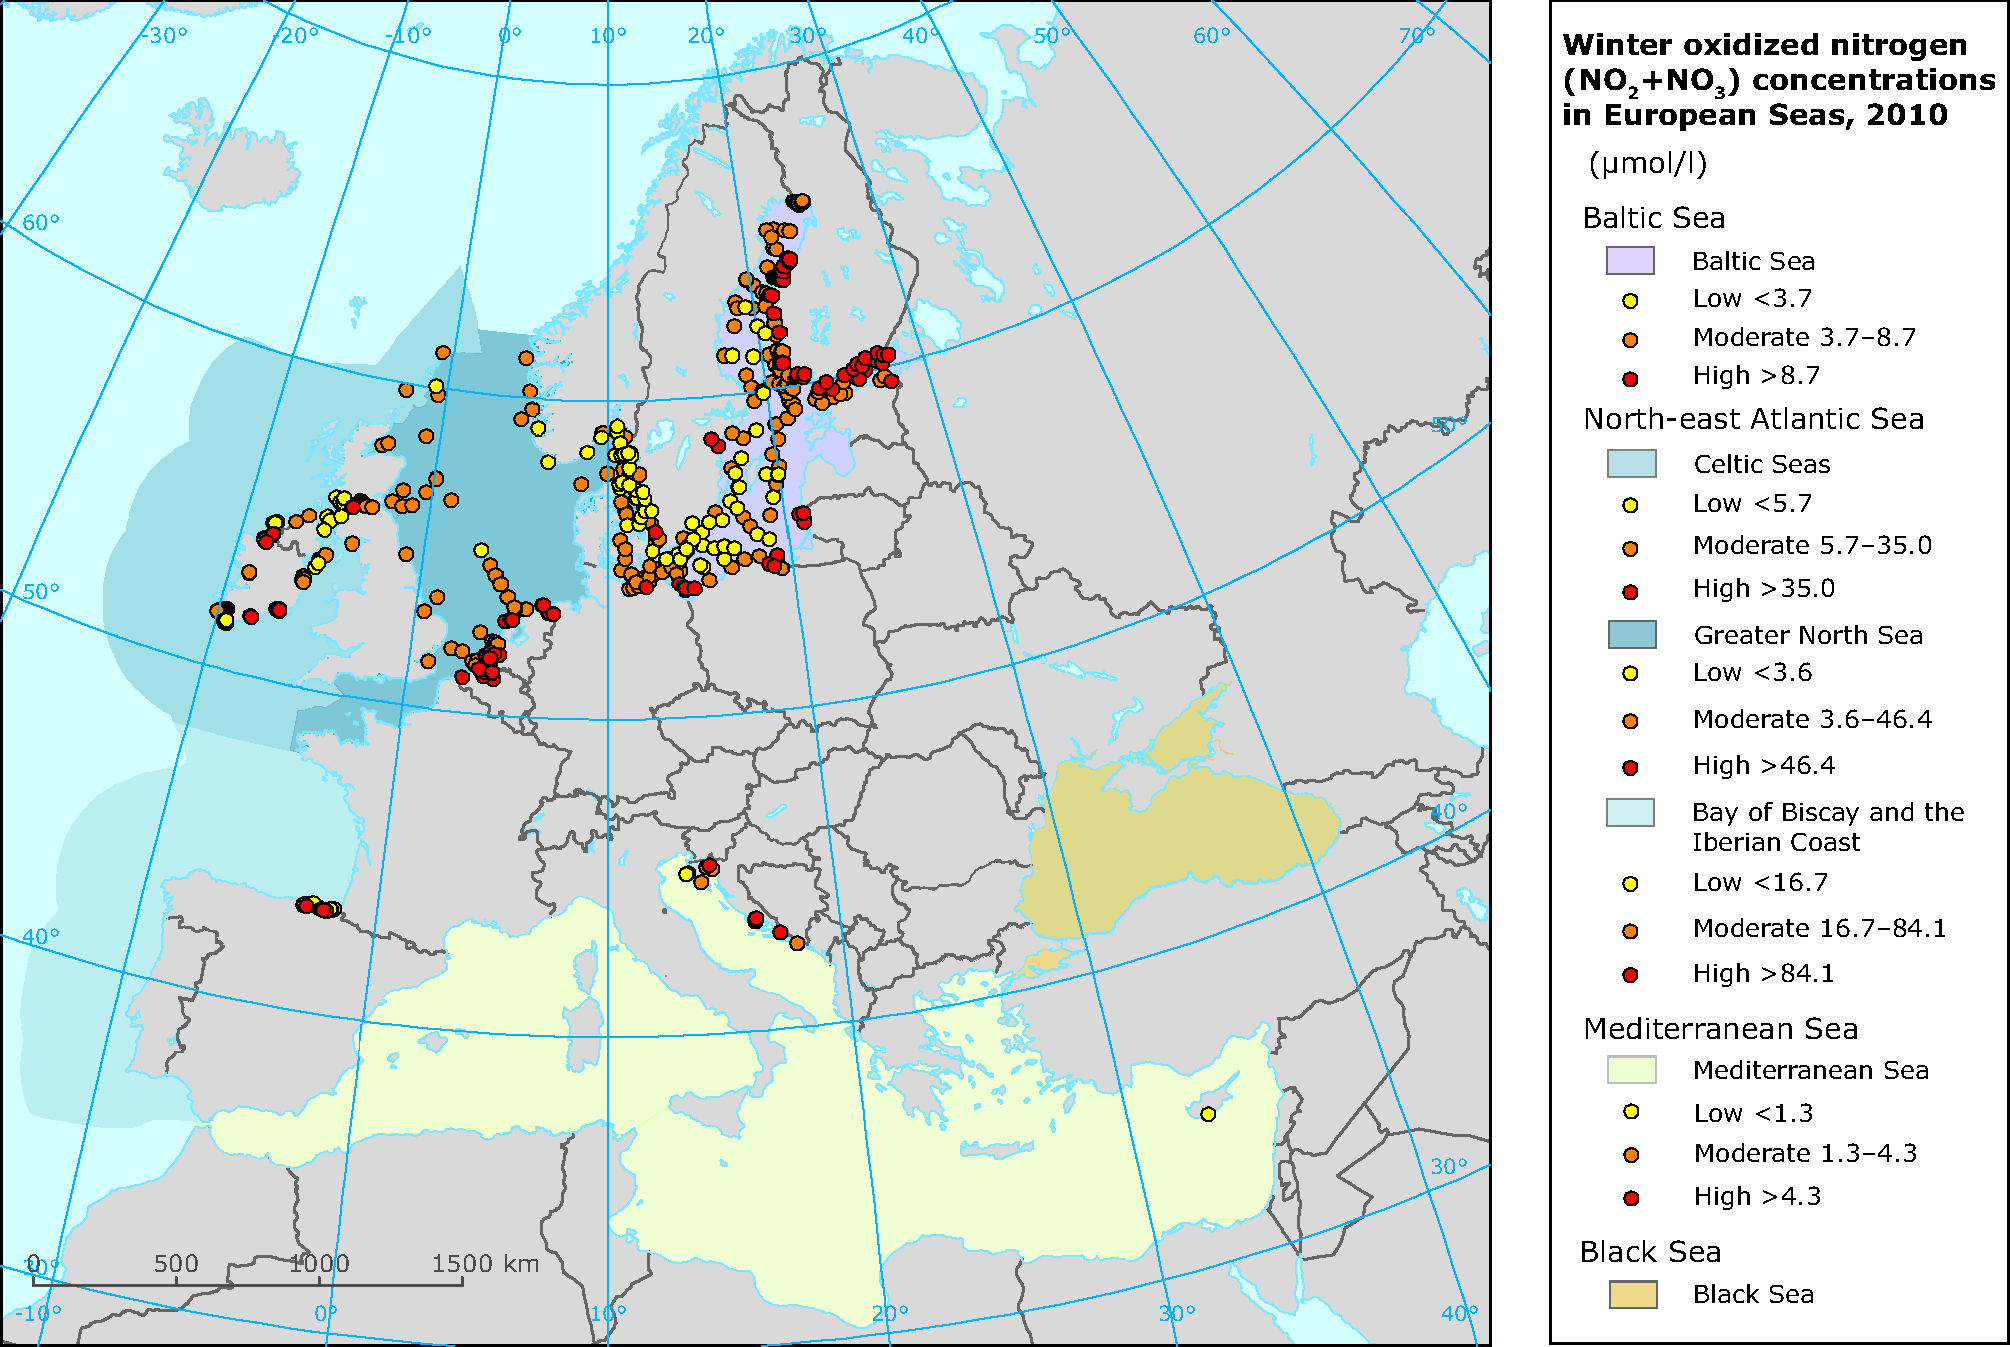 Winter oxidized nitrogen (NO2 + NO3) concentrations in European seas in 2010